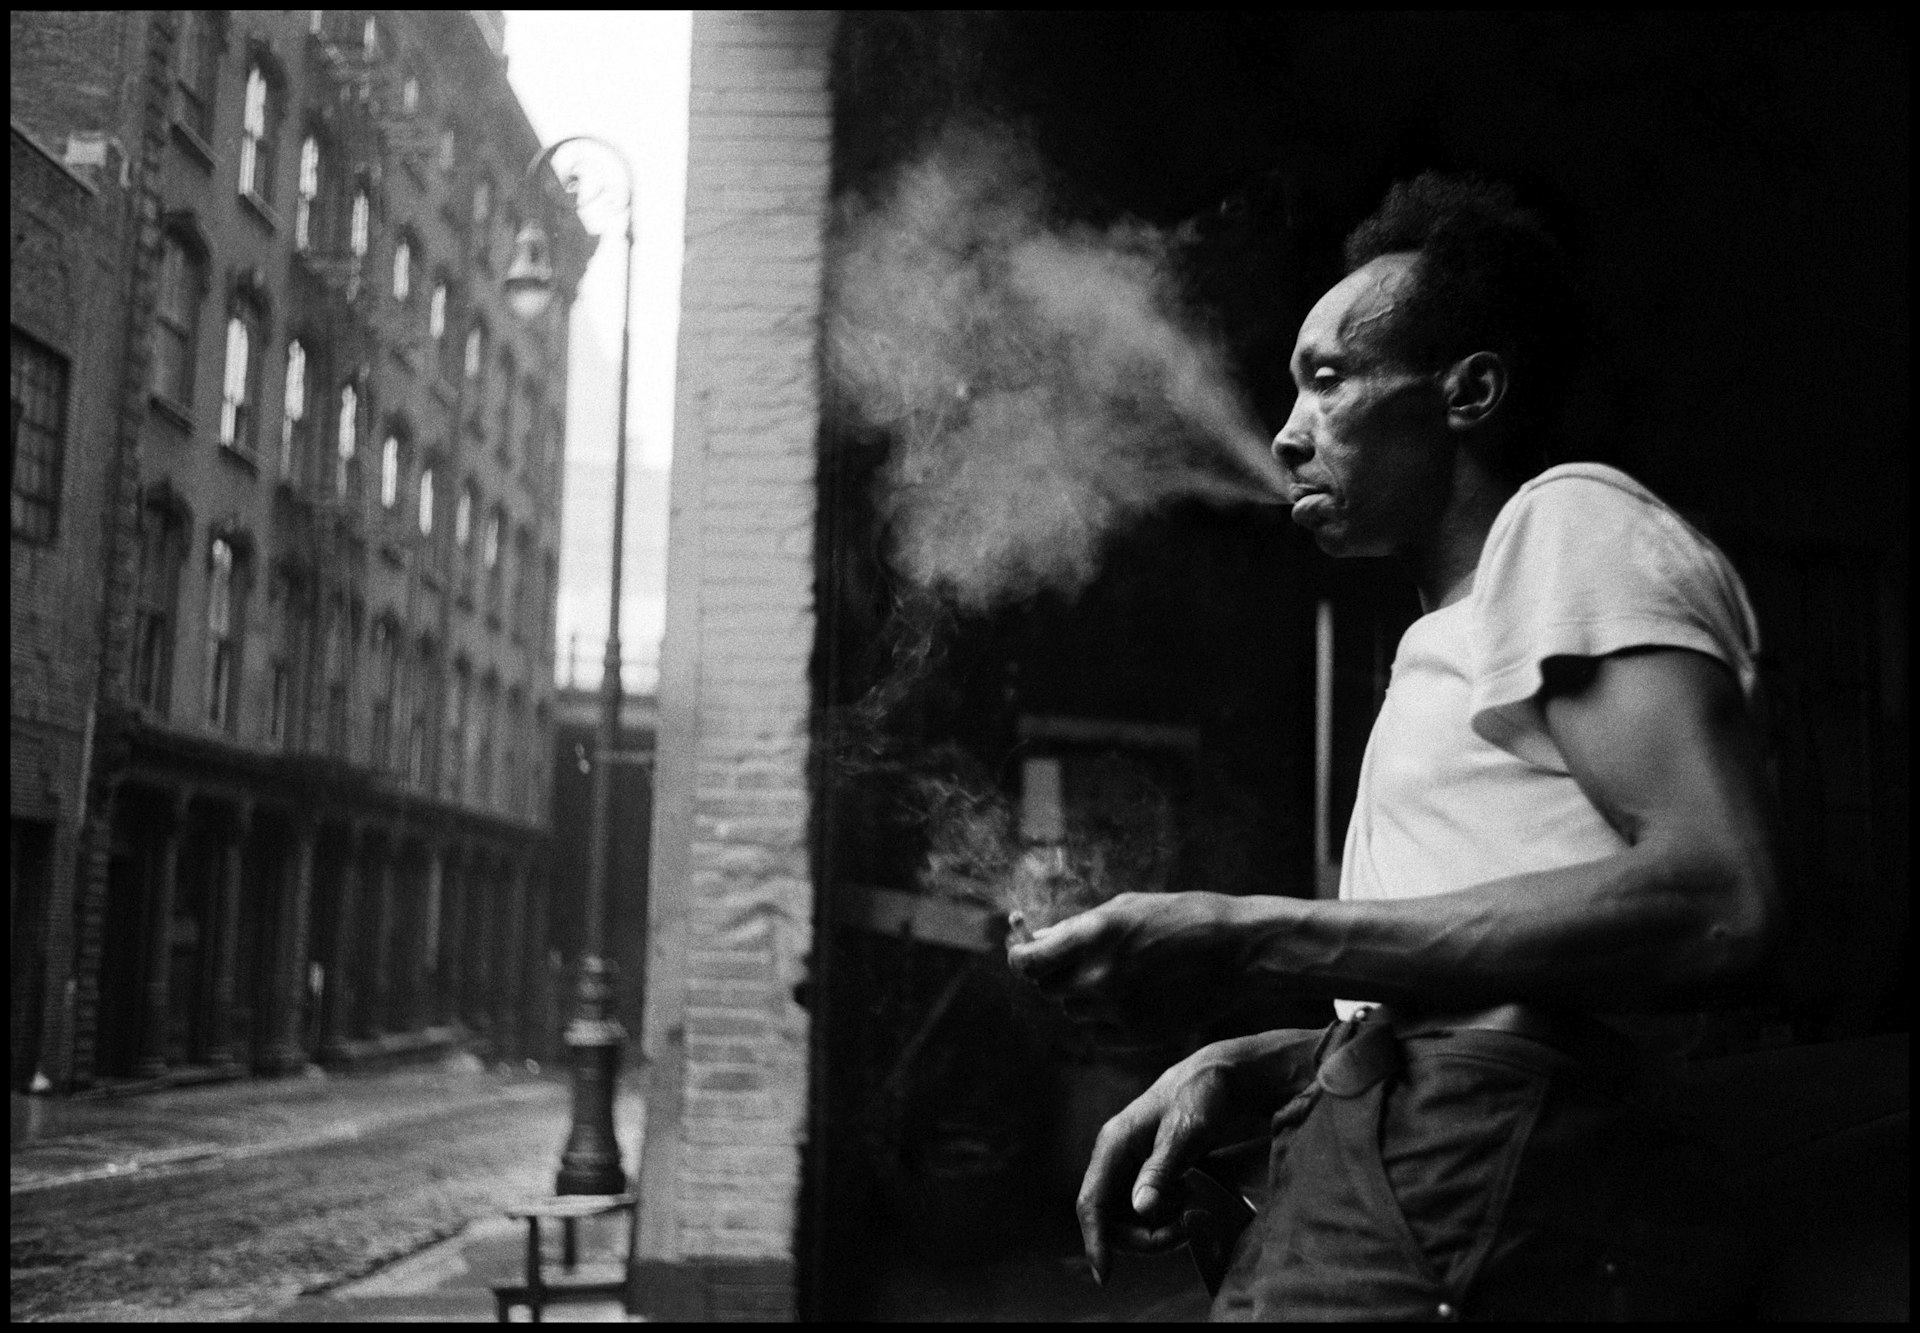 USA. New York City. 1955. Man smoking in the streets under the Brooklyn Bridge. Photo by Erich Hartmann.